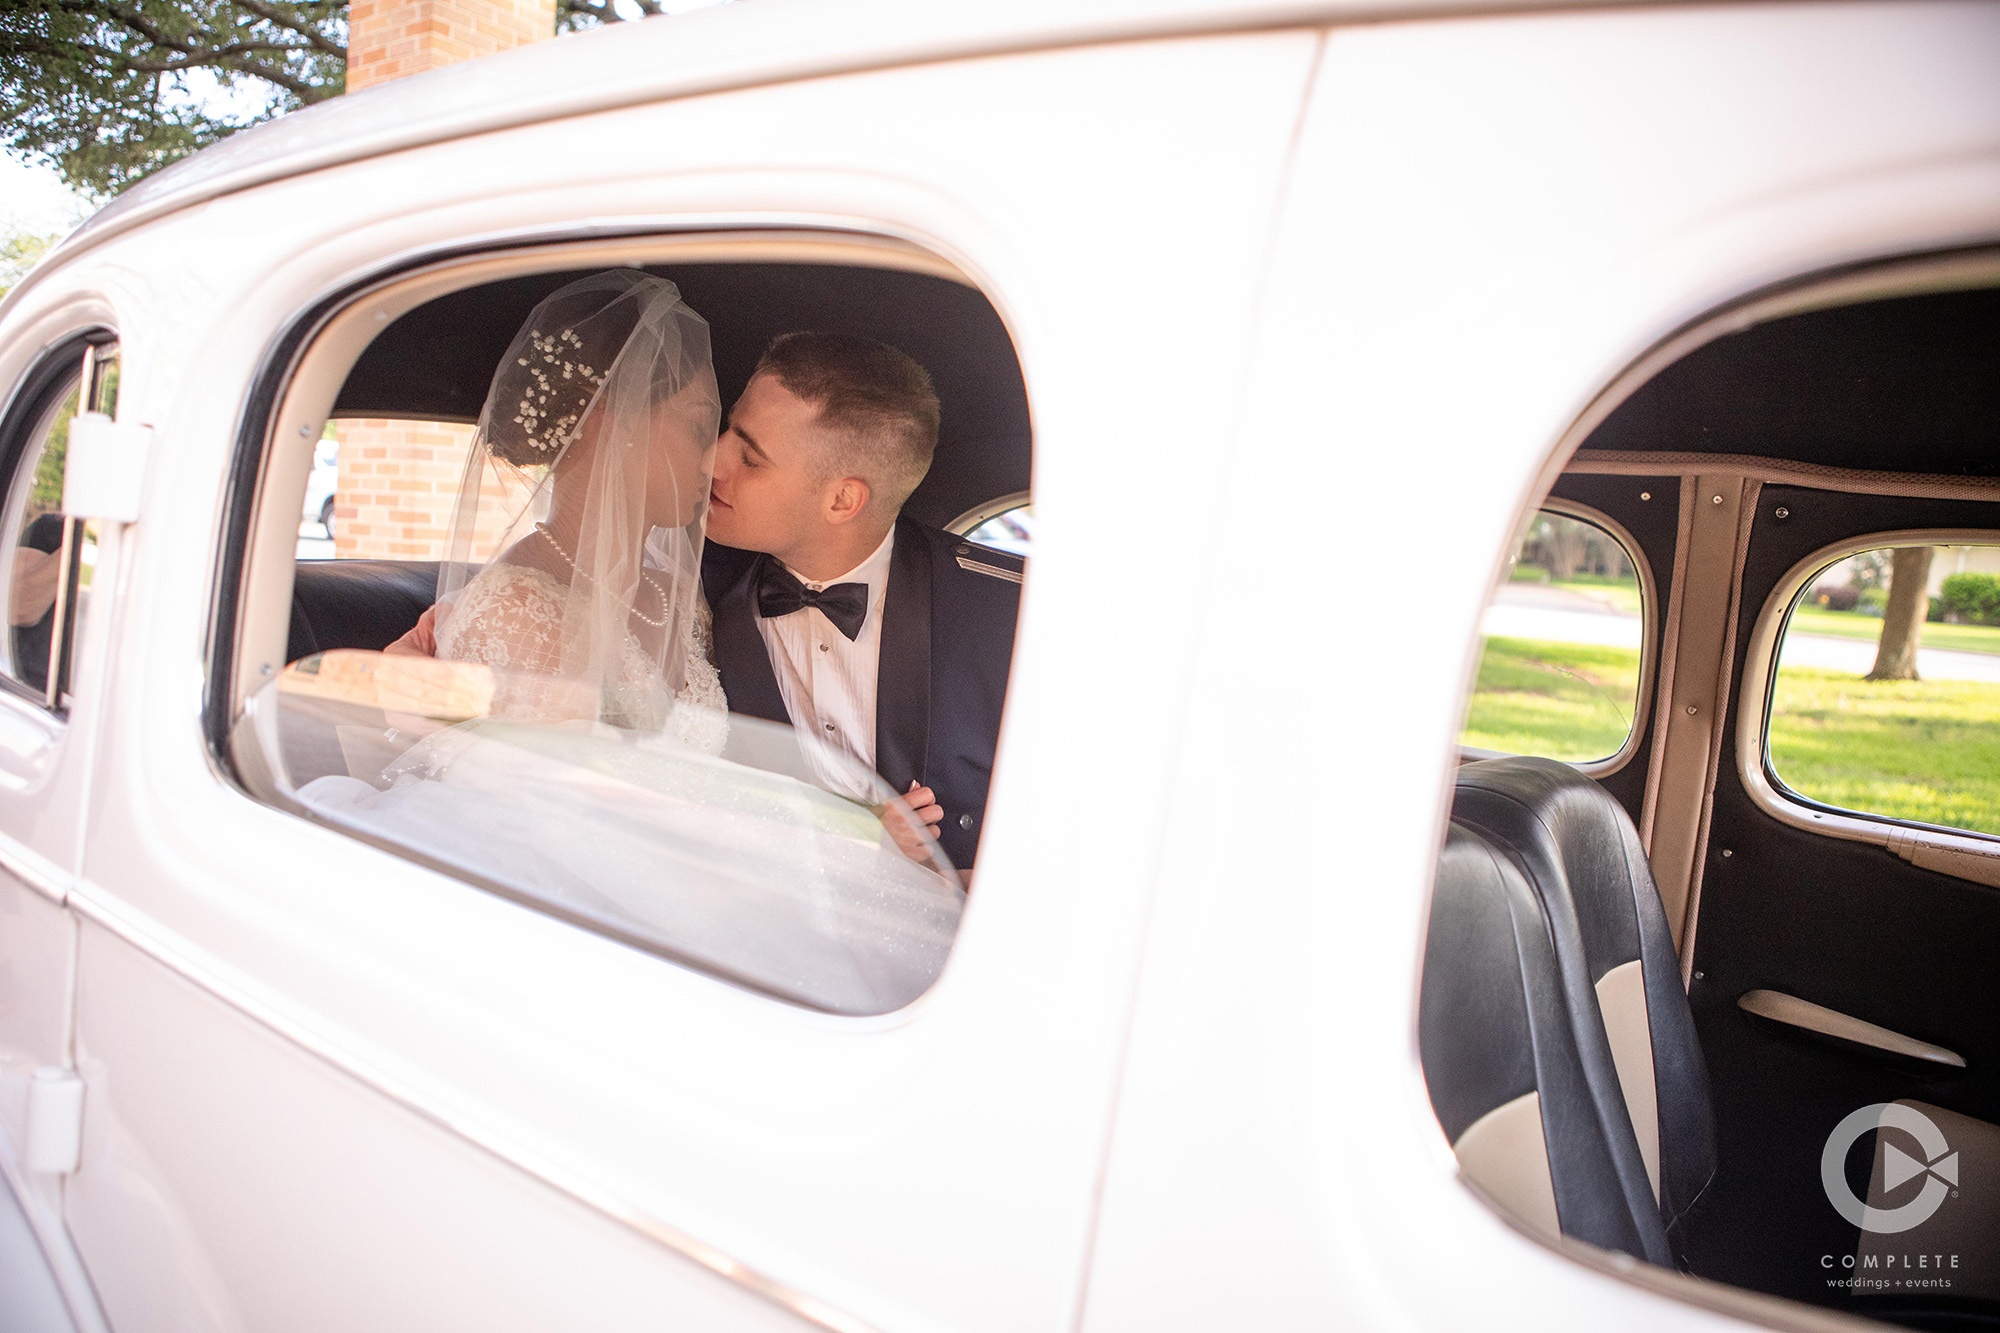 Wedding Planning Checklist | Bride + Groom in car